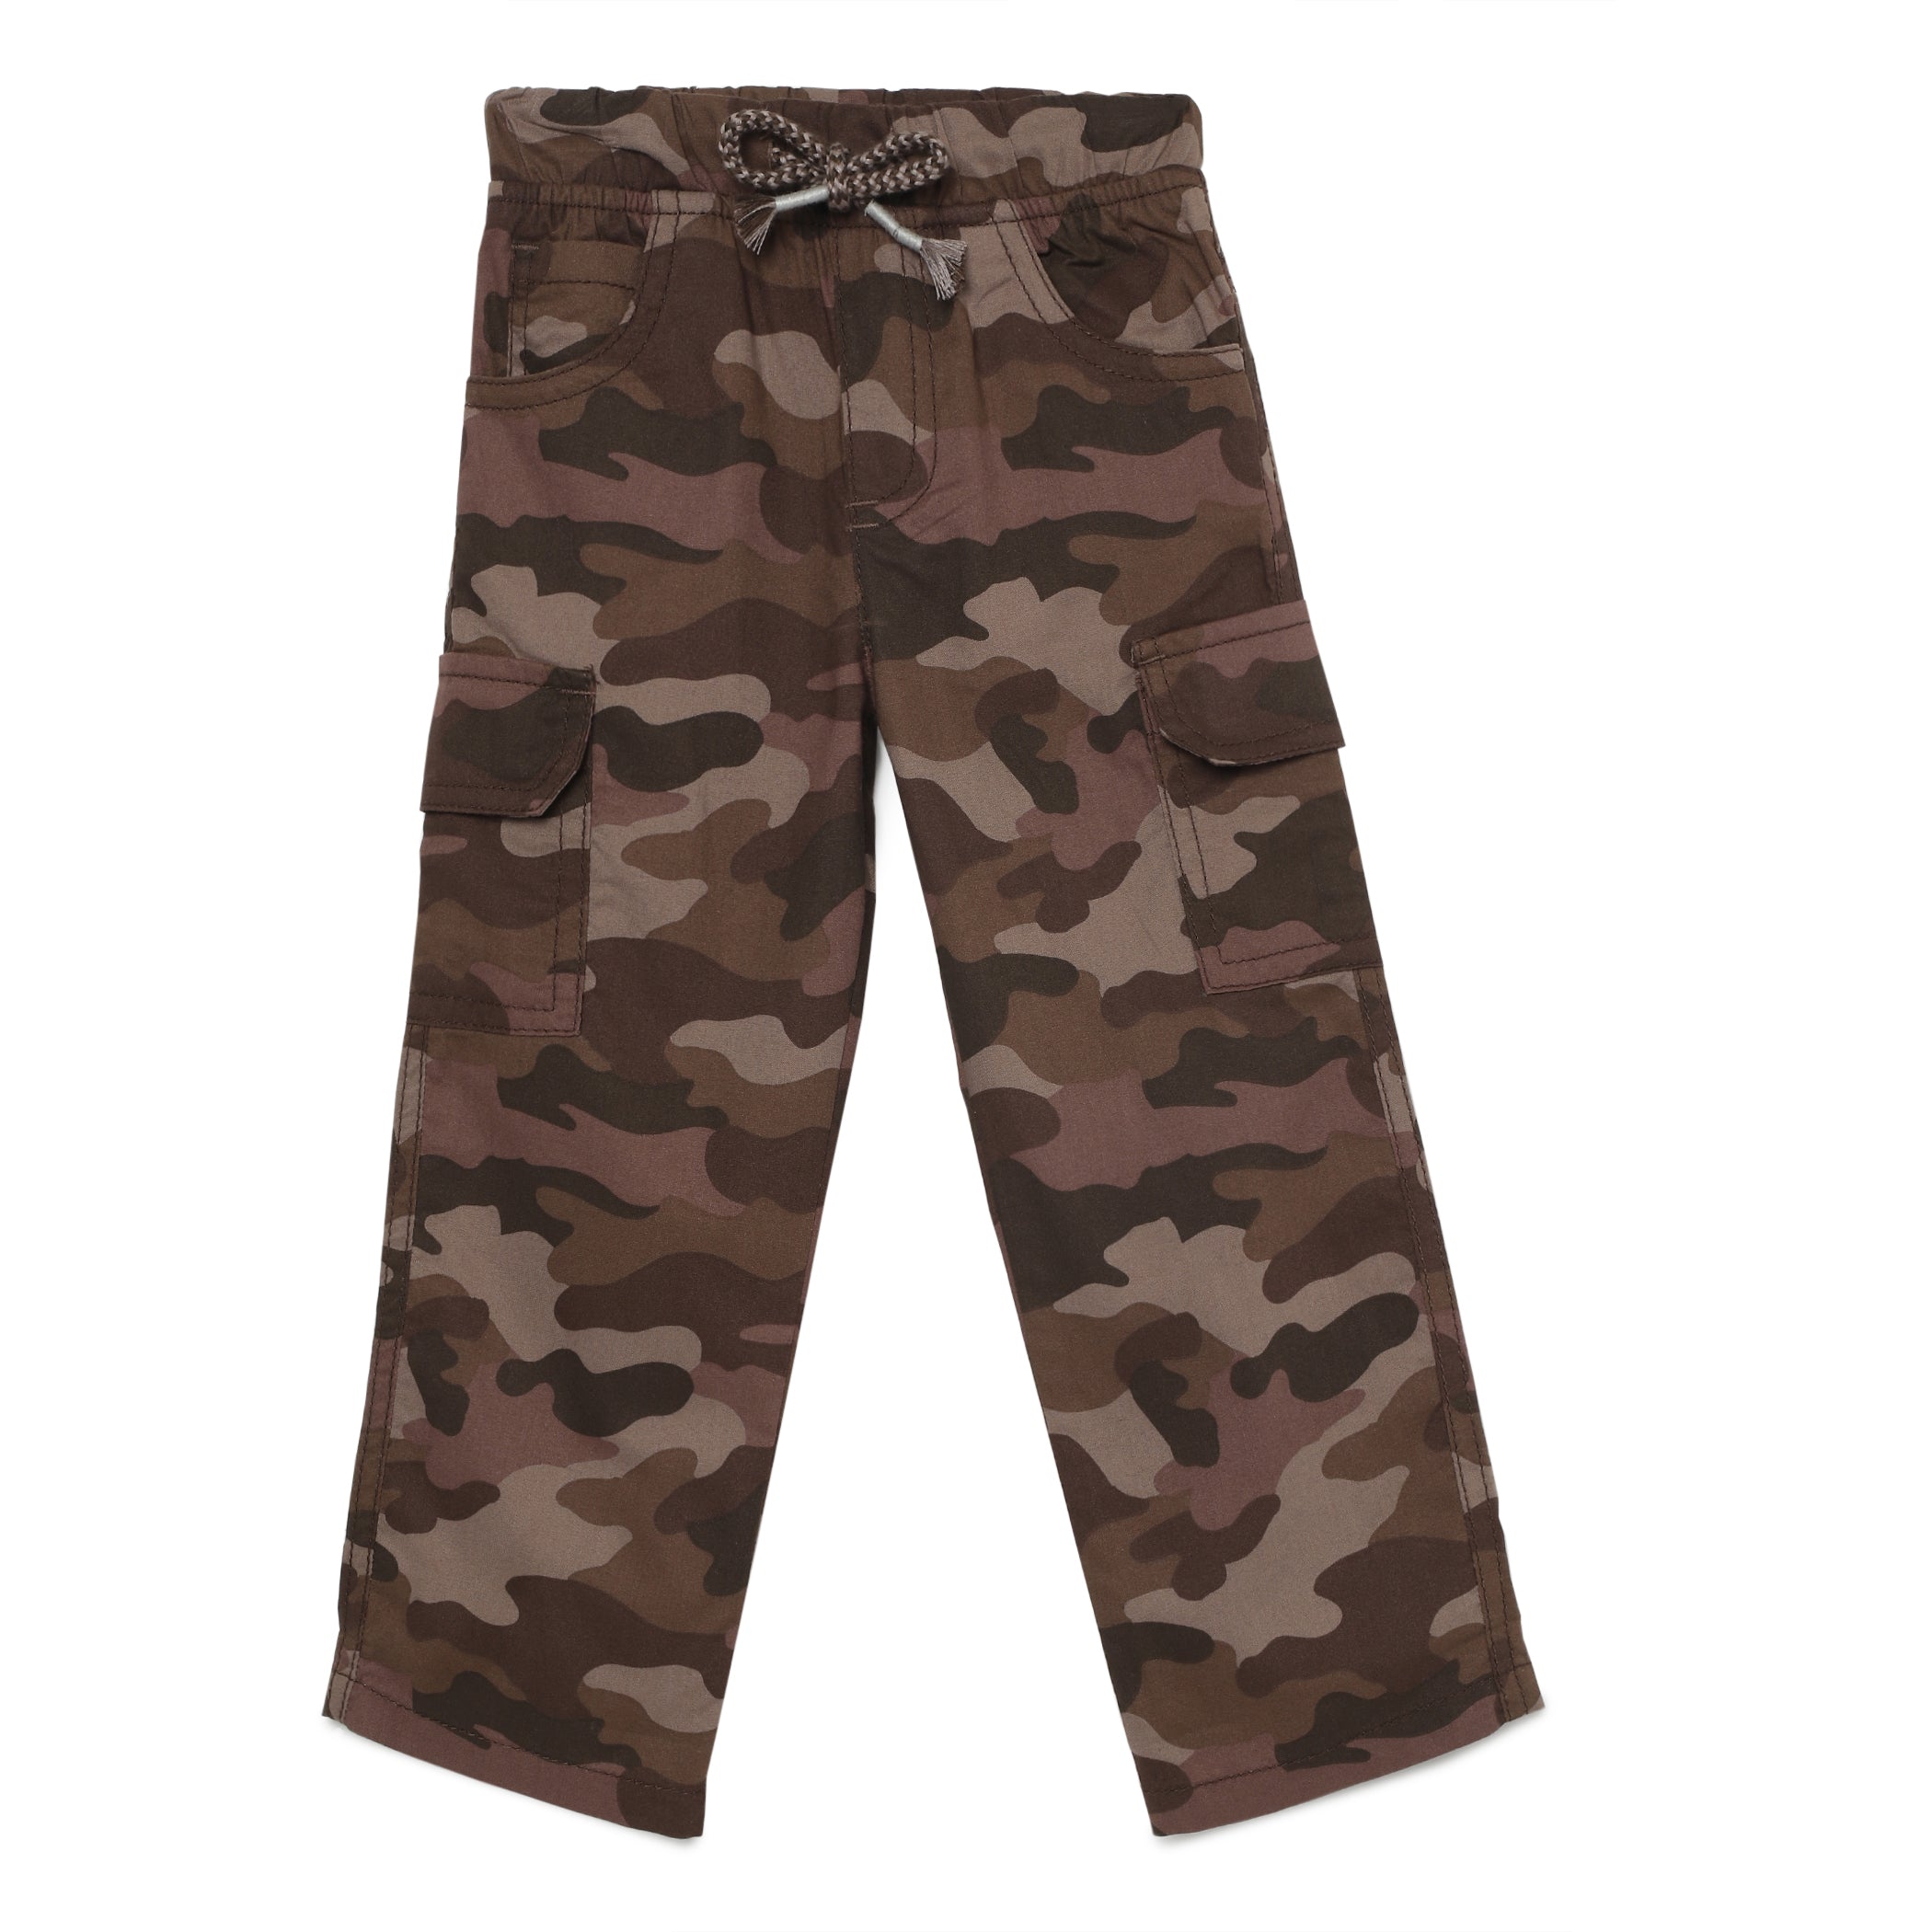 Camouflage Military Boys Cargo Pants For Teenage Boys Big Size 4 14 Yrs  LJ201127276m From Gcffu, $35.18 | DHgate.Com